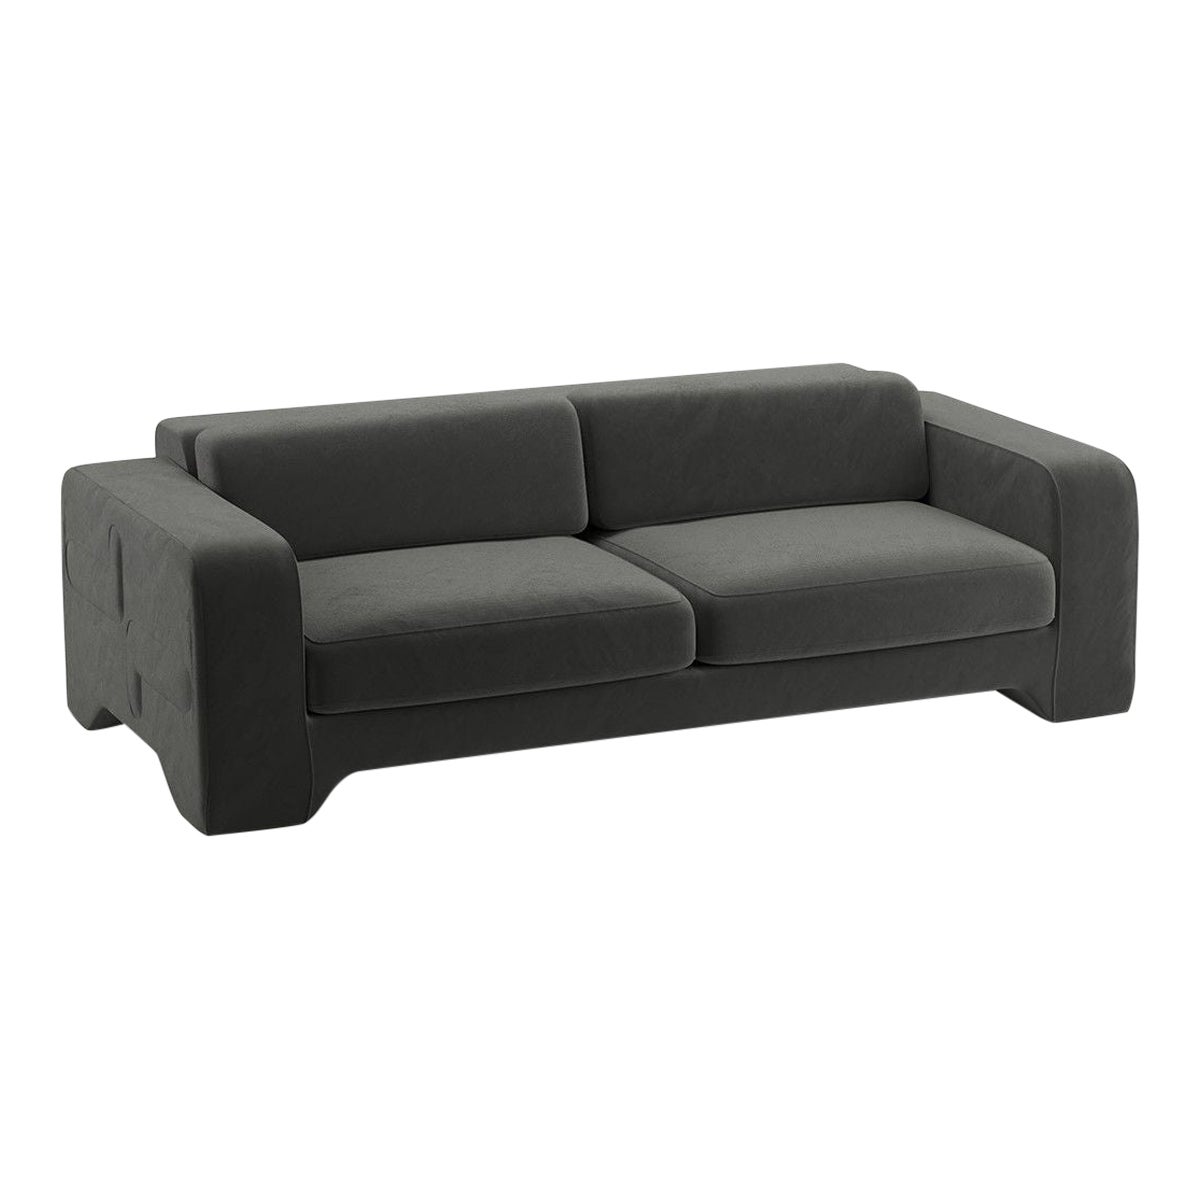 Popus Editions Giovanna 4 Seater Sofa in Khaki Como Velvet Upholstery